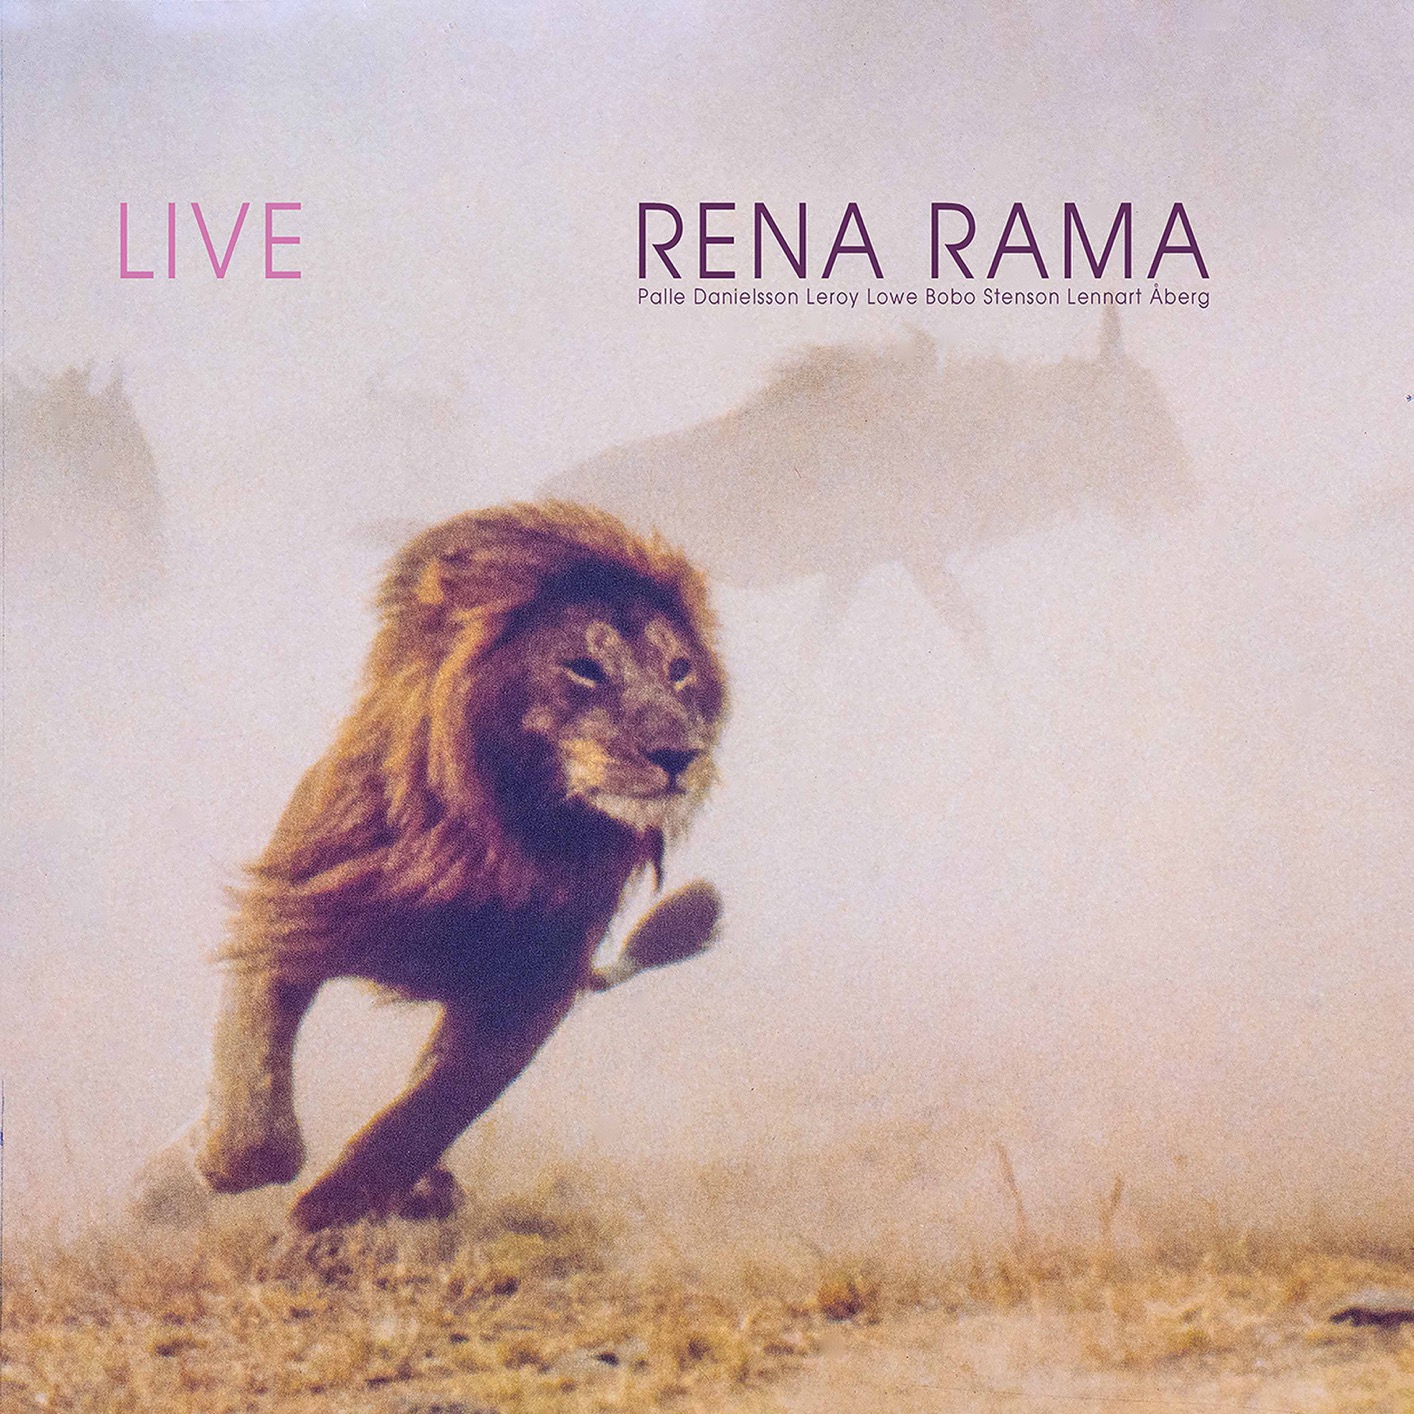 Rena Rama – Live (Remastered) [Live at Fasching Stockholm, 1975] (2020) [FLAC 24bit/44,1kHz]